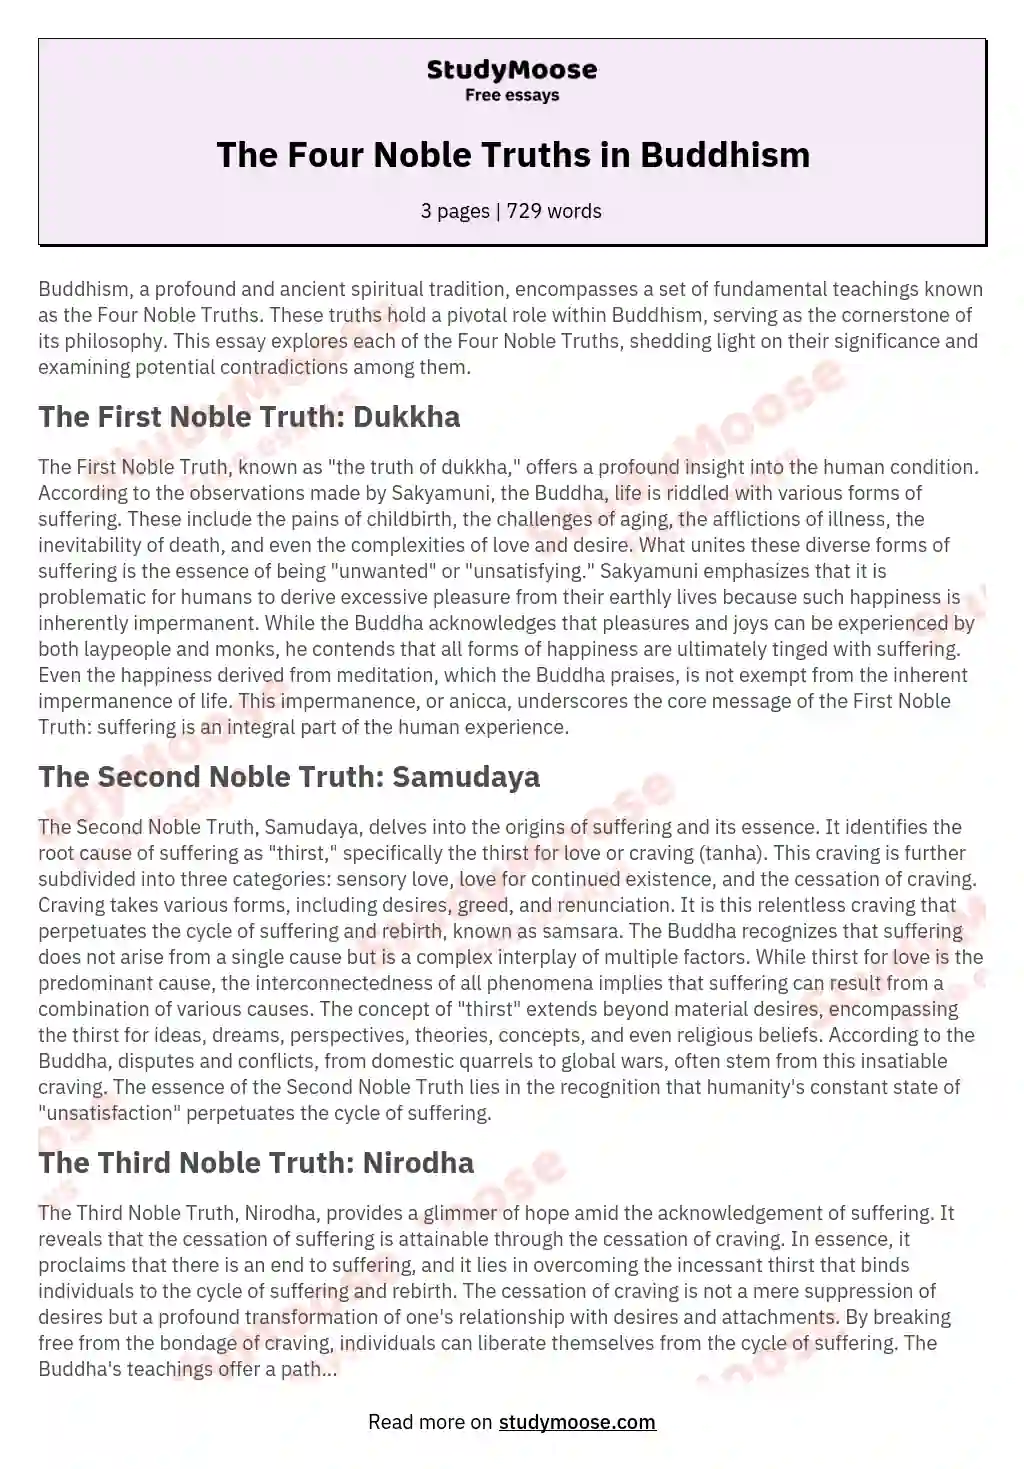 essay on the four noble truths